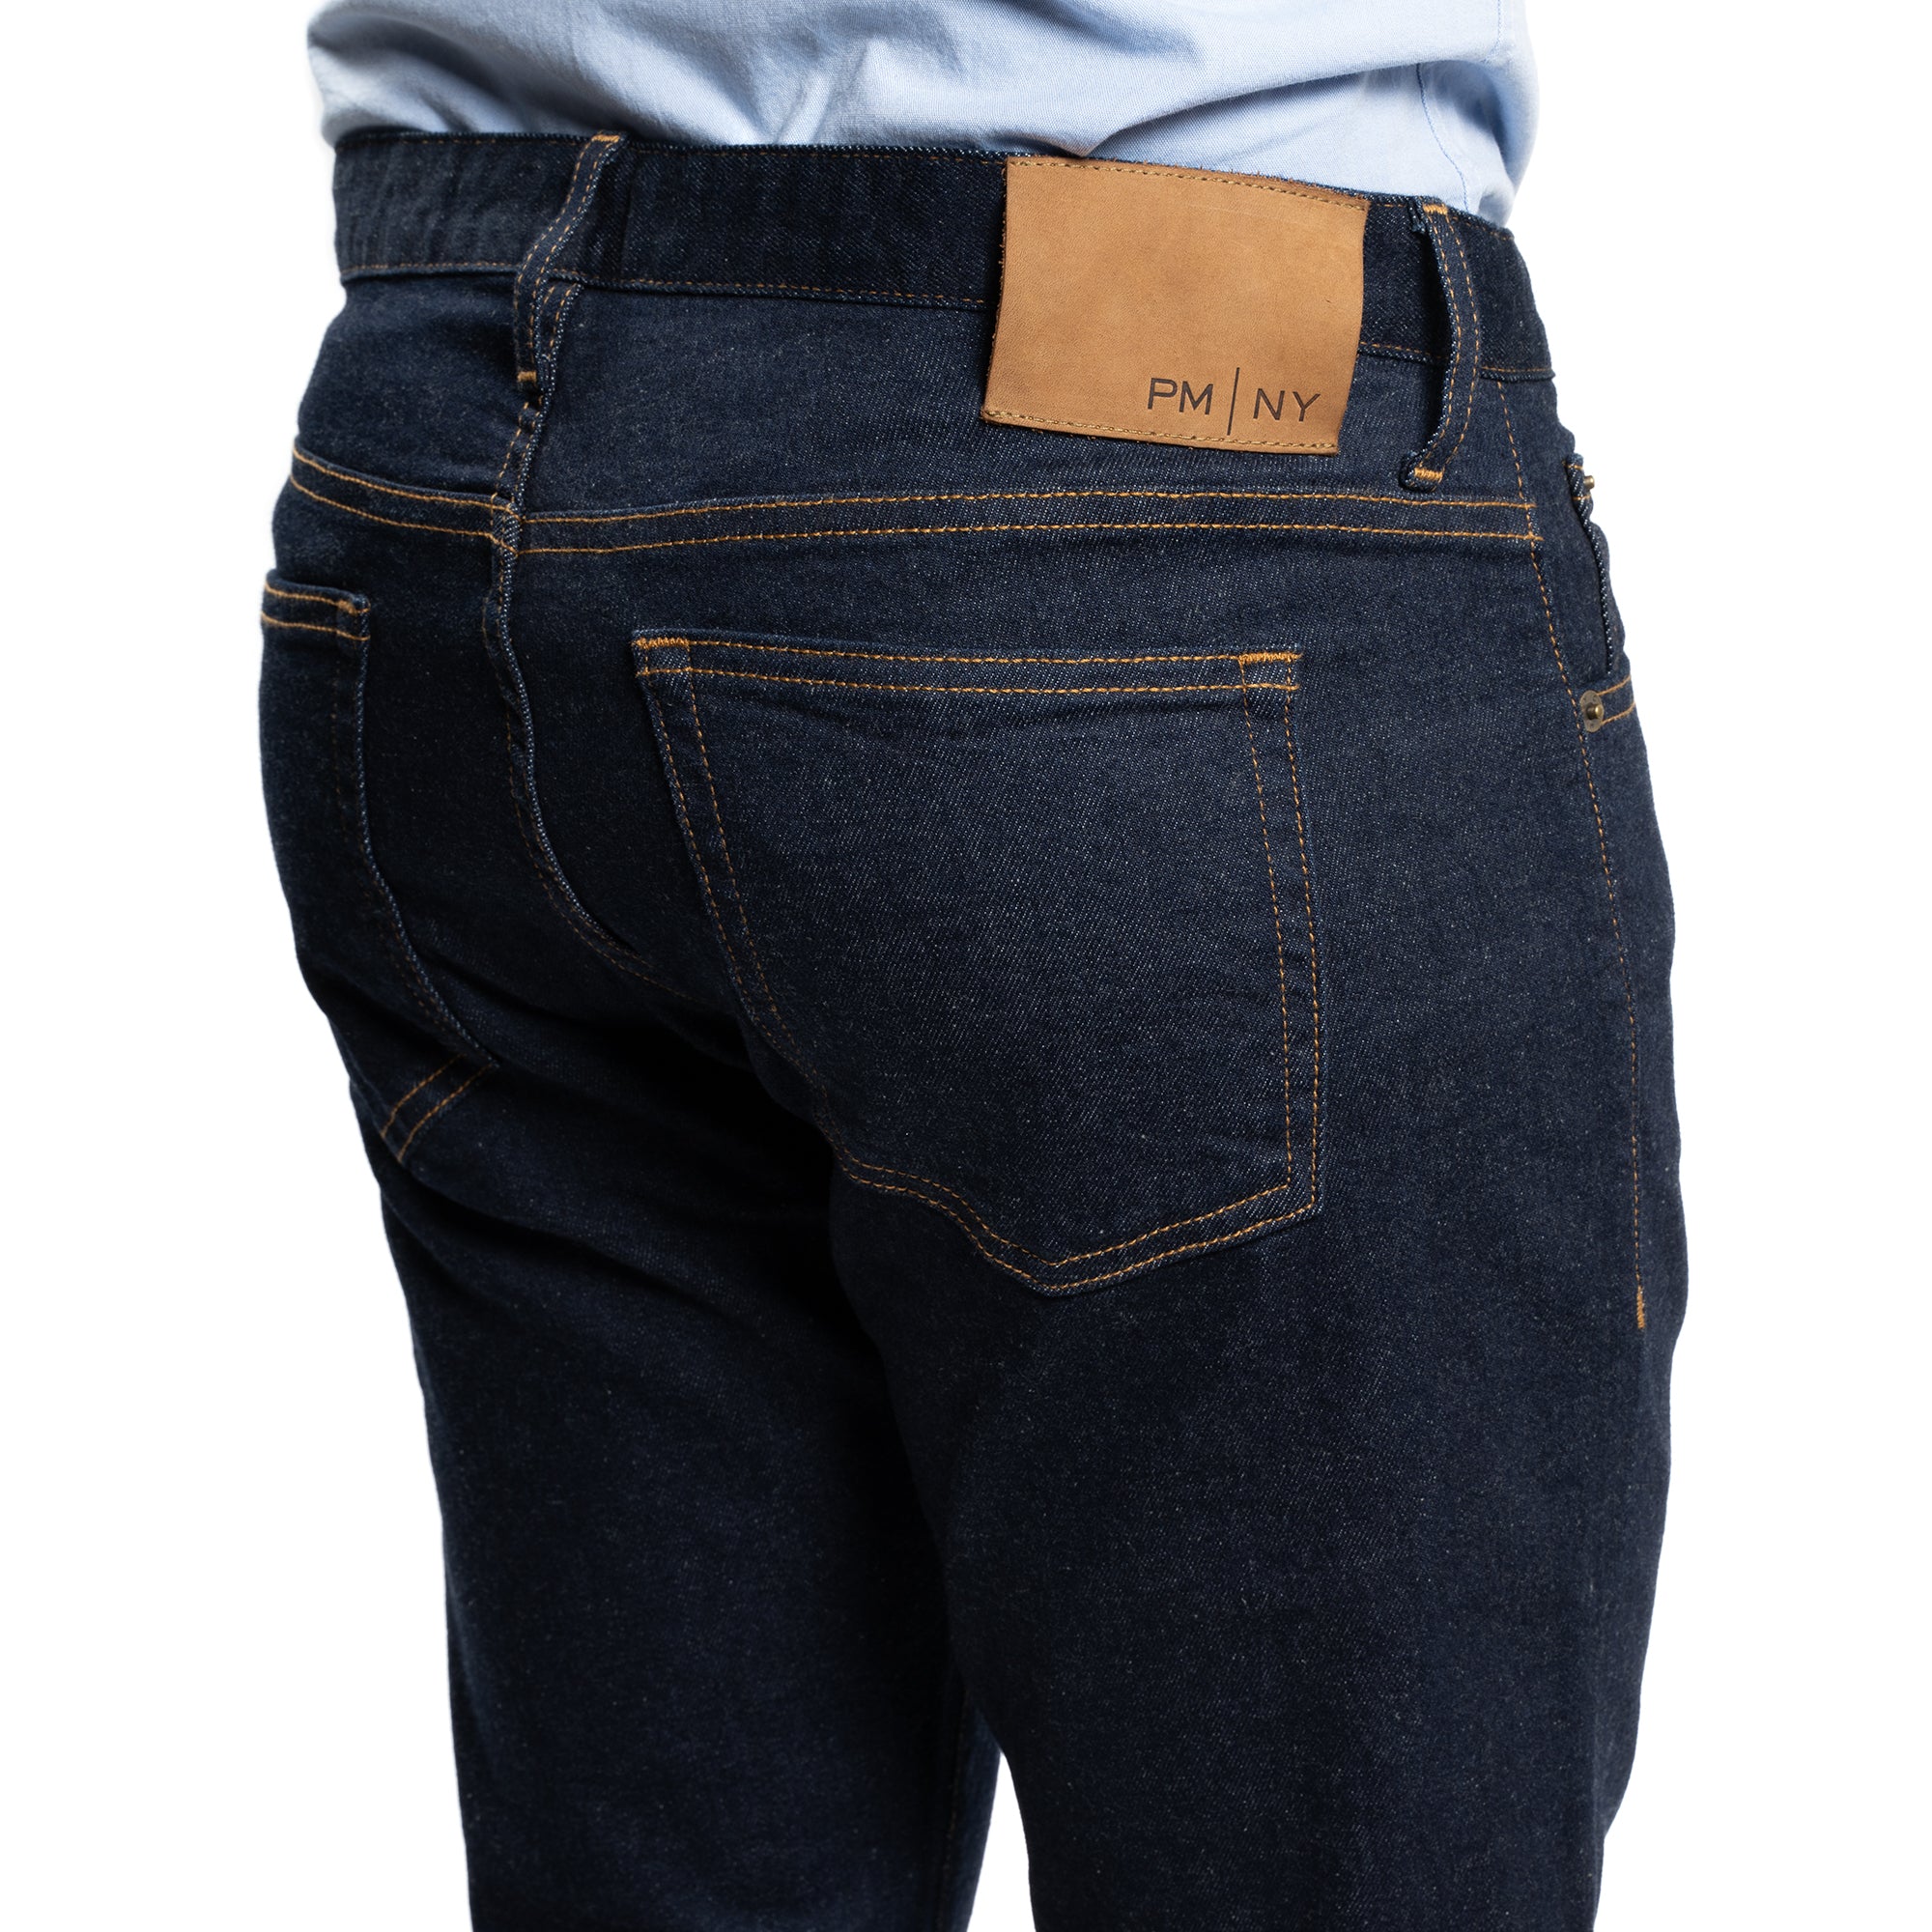 Johnny Stretch Jeans Standard Fit - Indigo Rinse